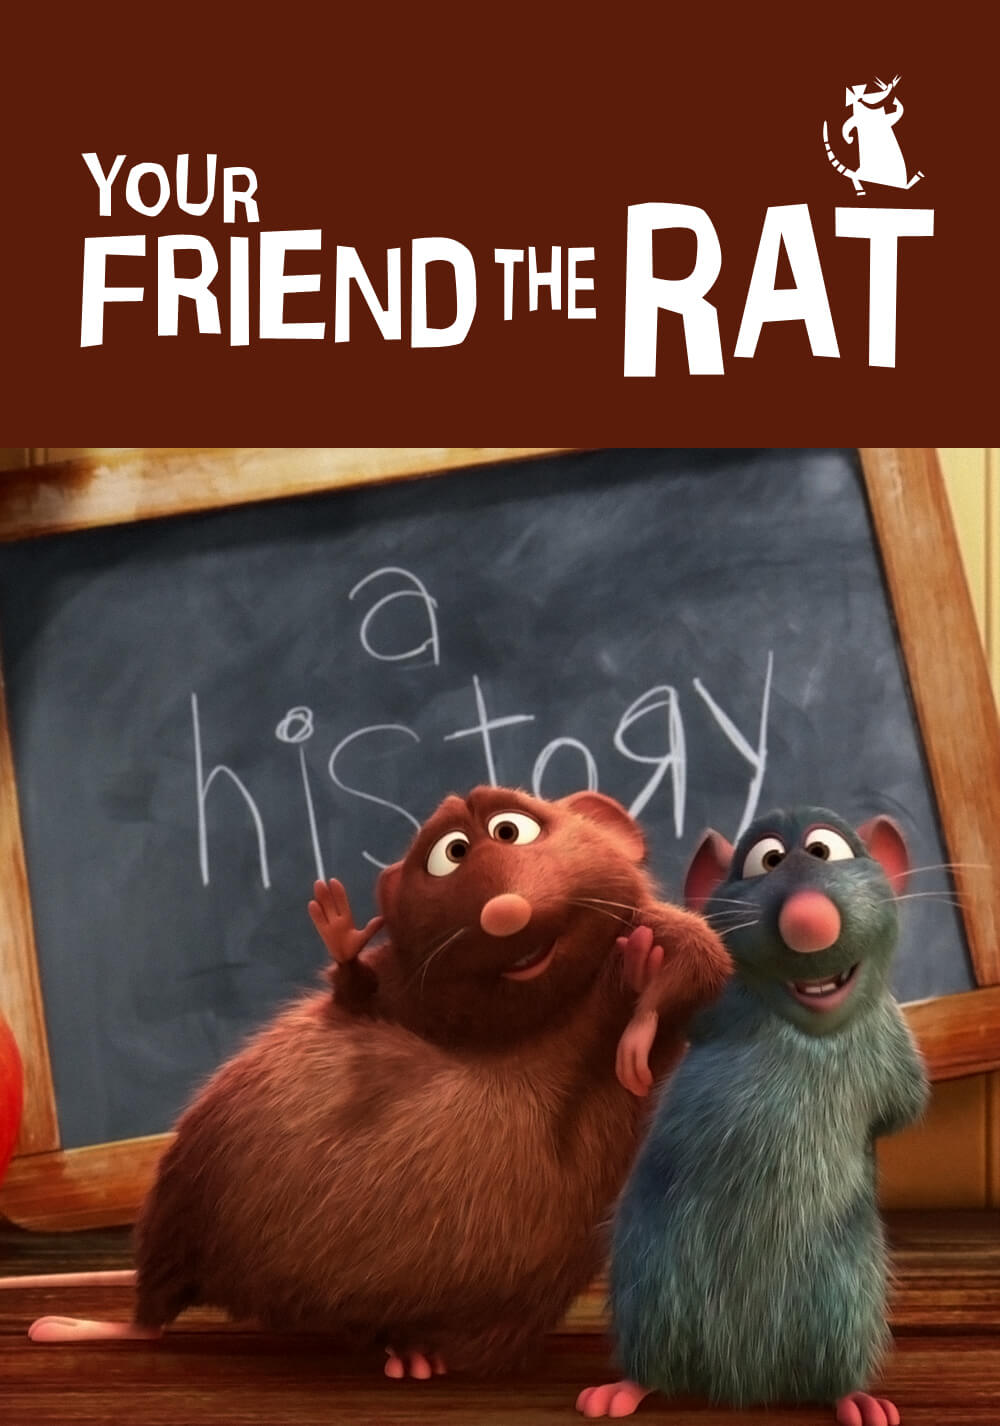 دوست تو موش صحرایی (Your Friend the Rat)